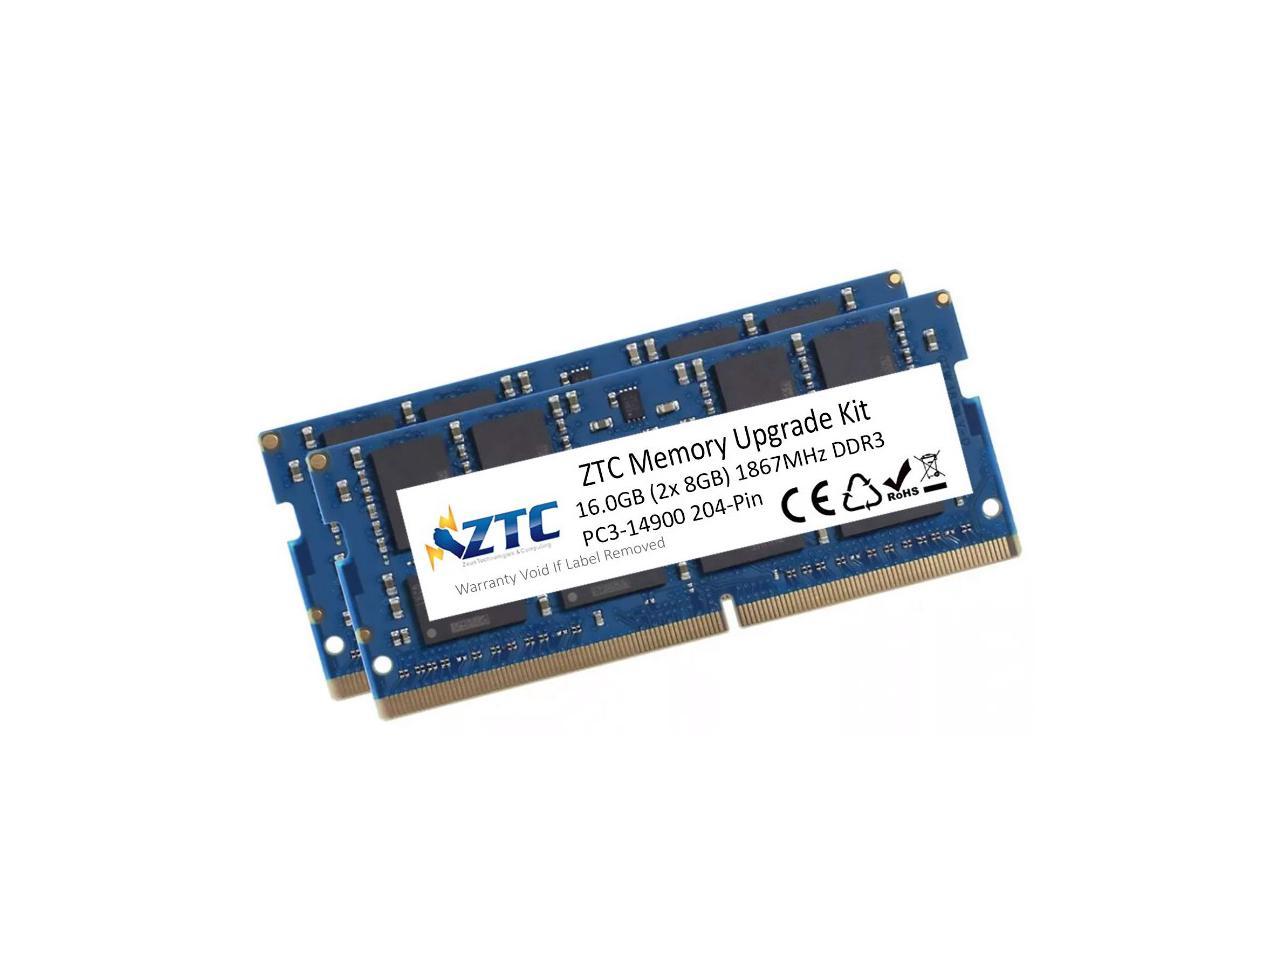 ZTC 16GB (2X 8GB) 1867MHz DDR3 SO-DIMM PC3-14900 204-Pin CL11 Memory Upgrade Kit